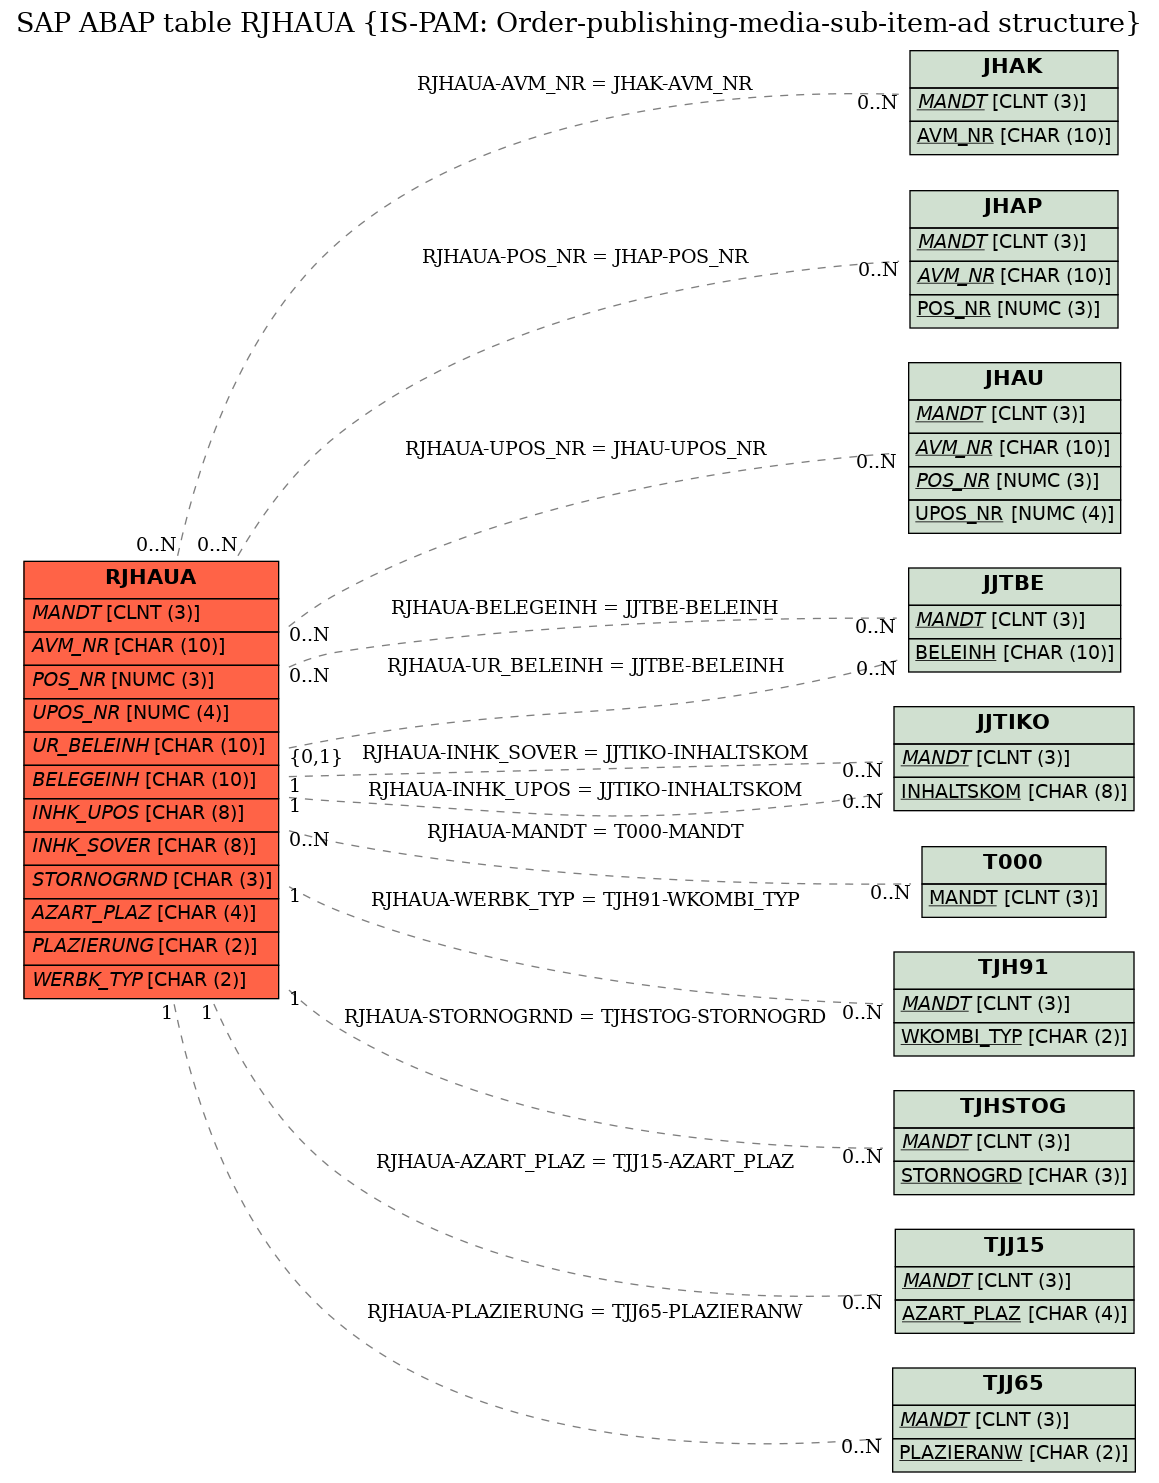 E-R Diagram for table RJHAUA (IS-PAM: Order-publishing-media-sub-item-ad structure)